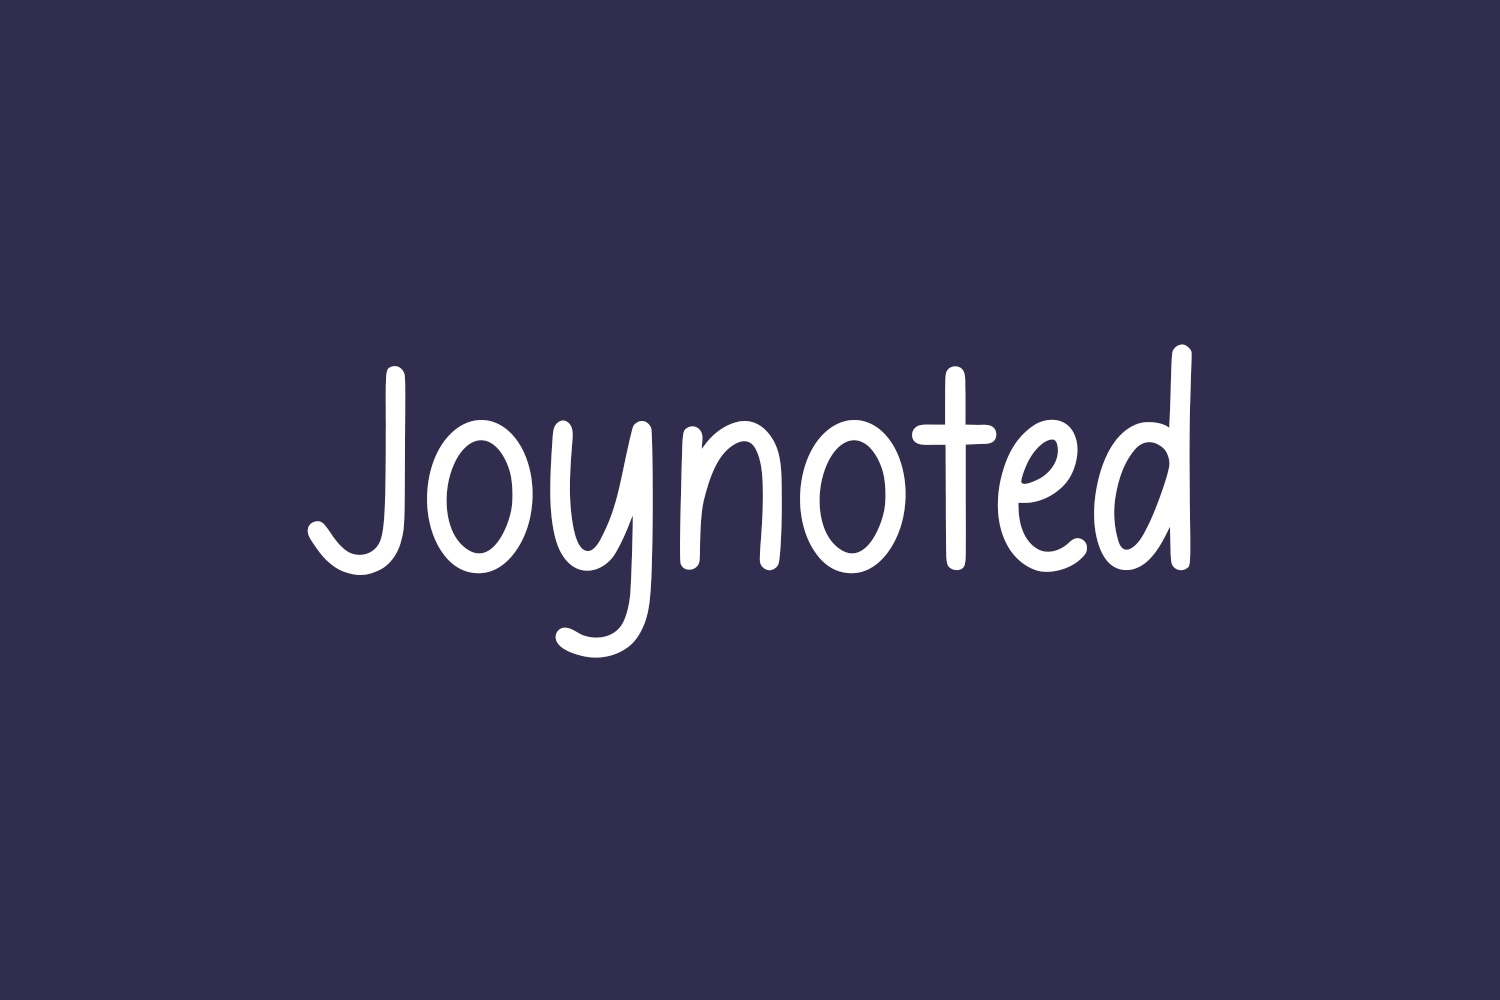 Joynoted Free Font